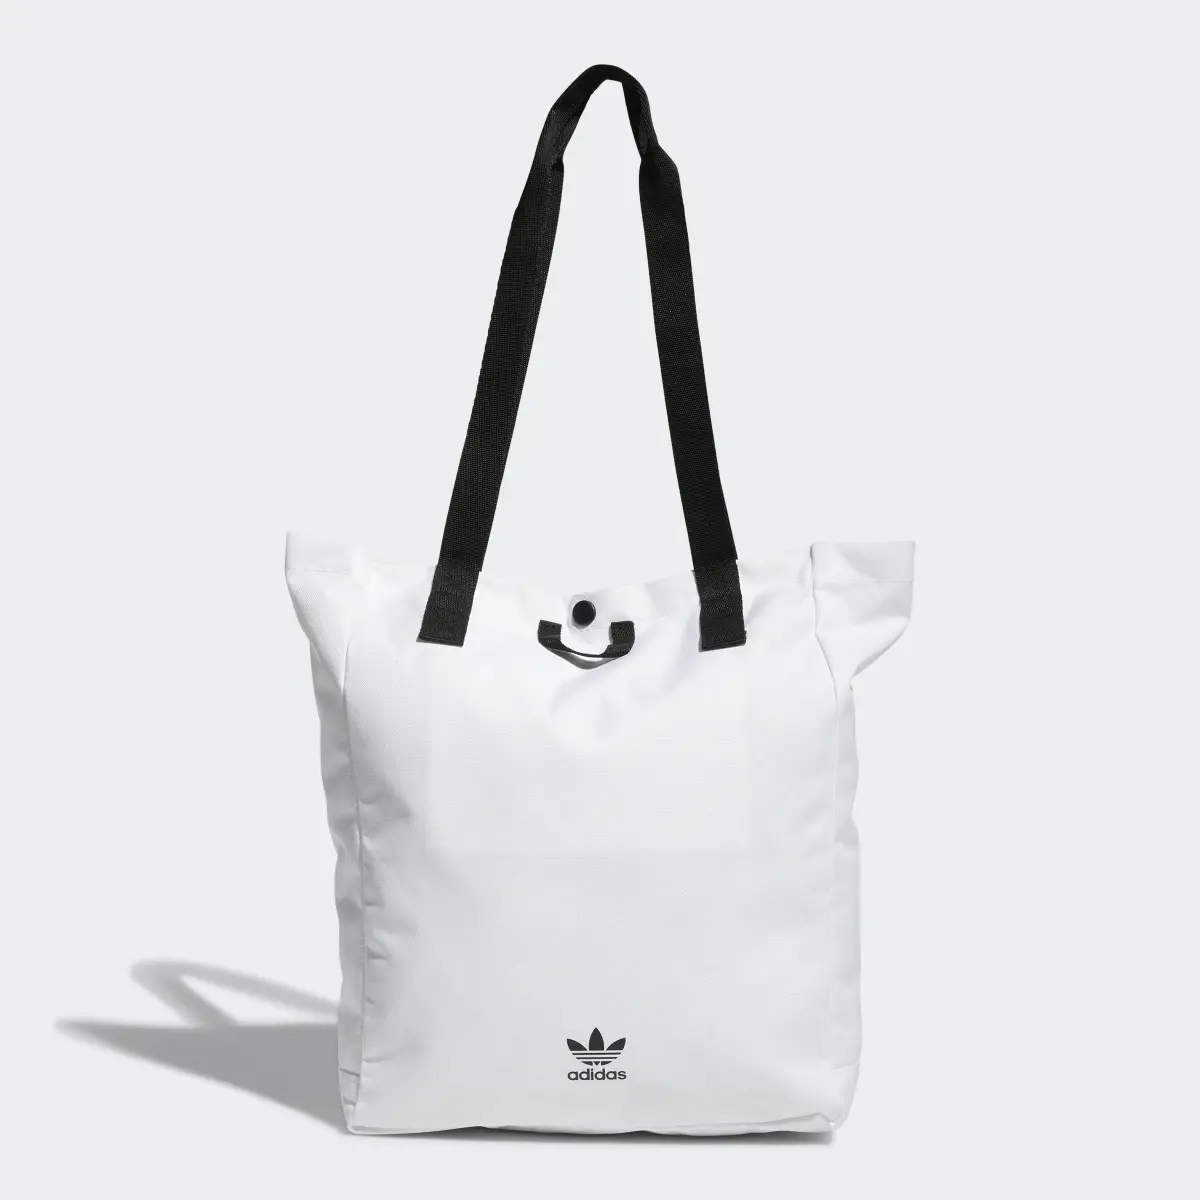 Adidas Simple Tote Bag. 3